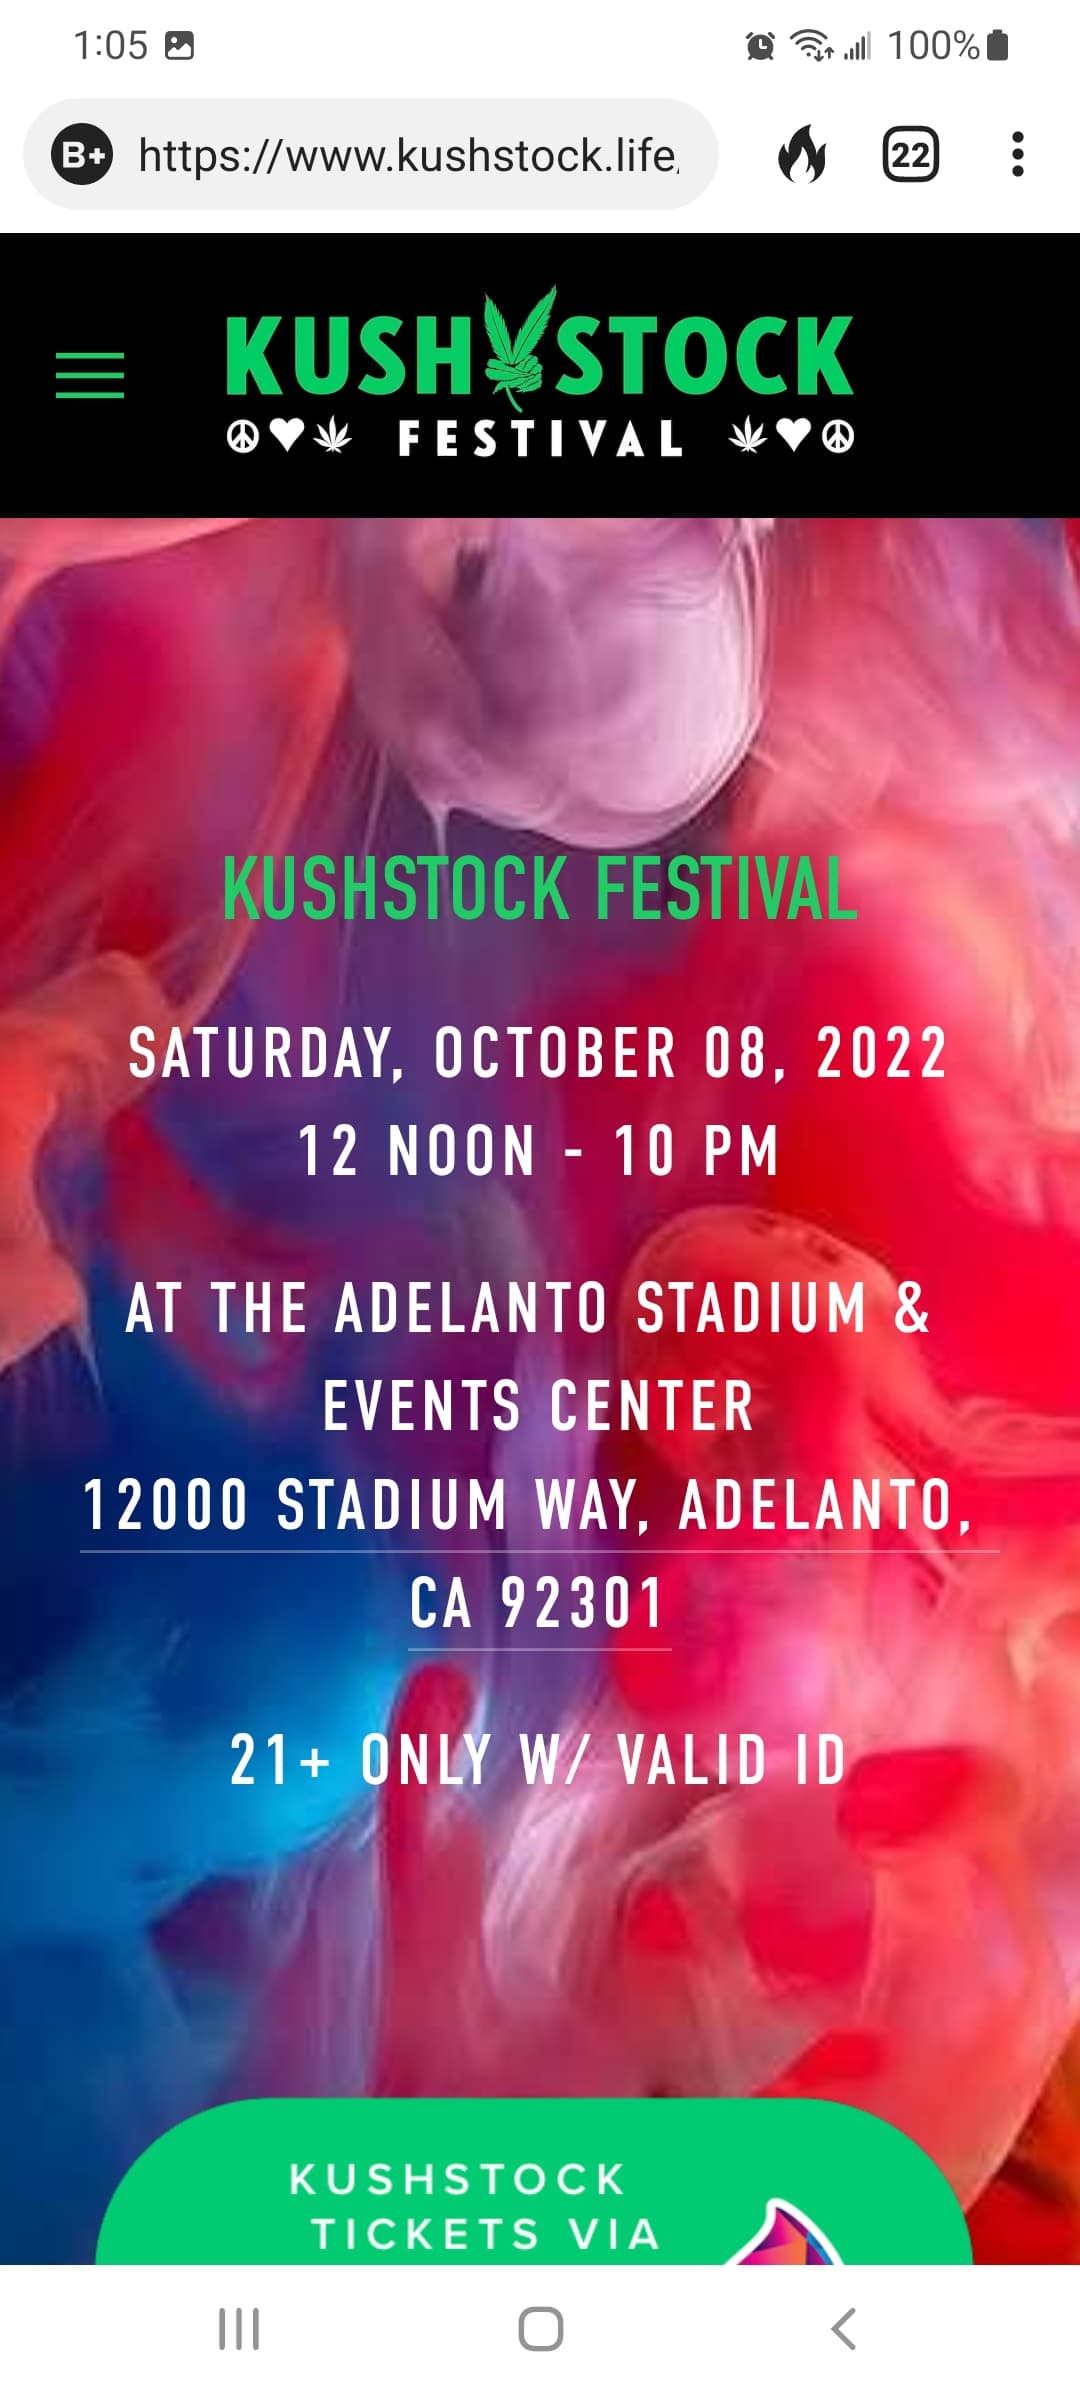 Kush stock 2022 Events Future4200